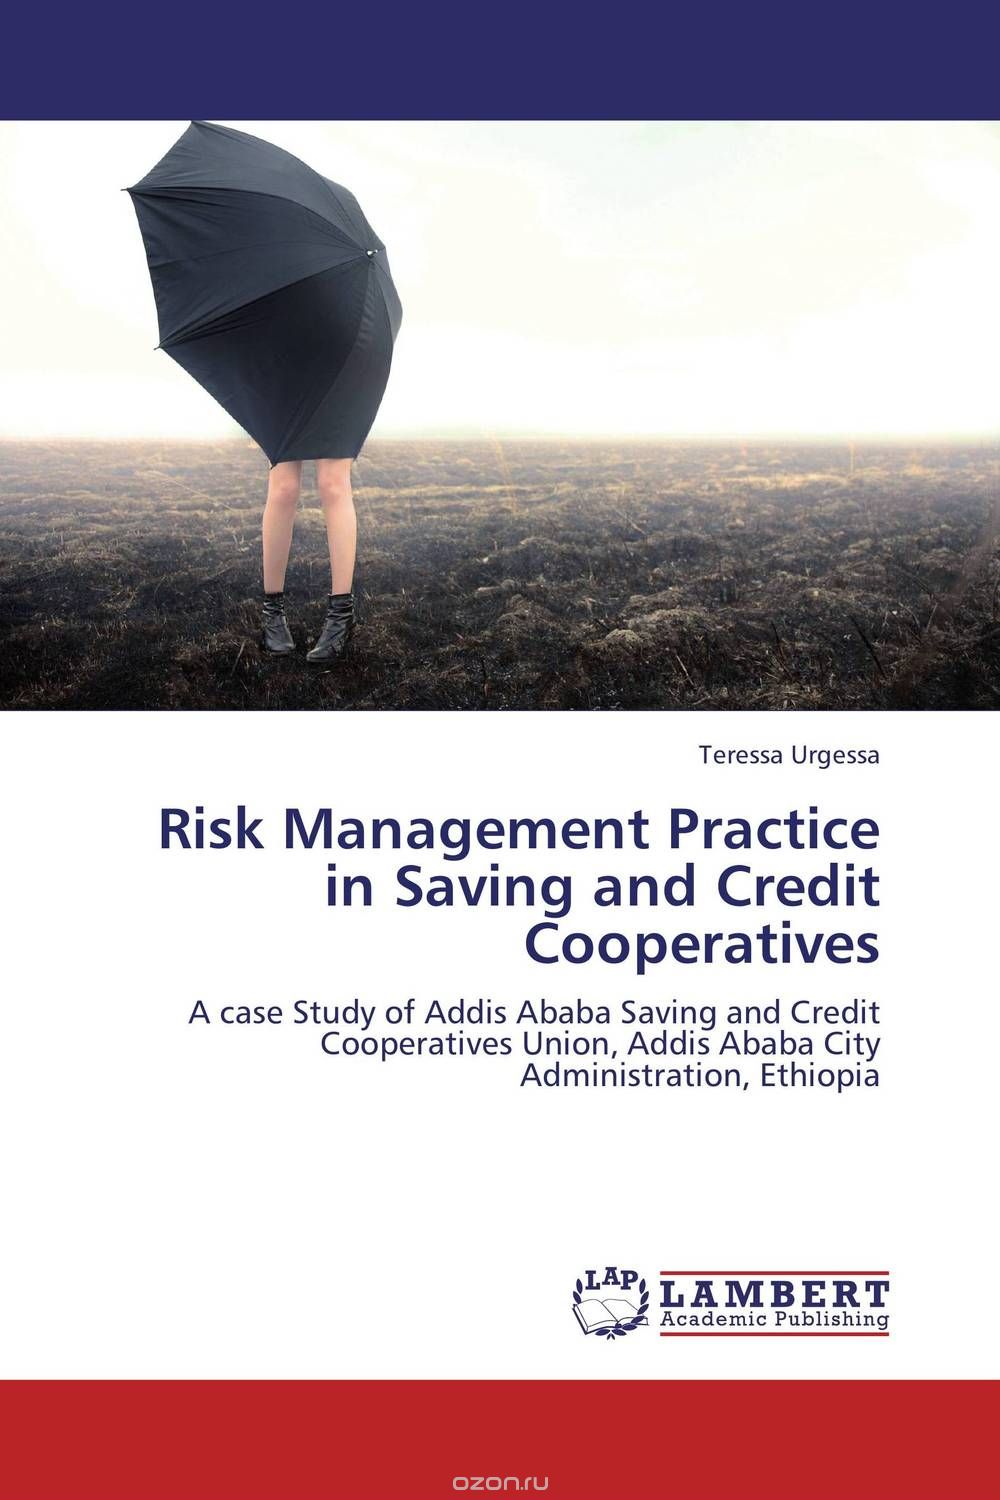 Скачать книгу "Risk Management Practice in Saving and Credit Cooperatives"